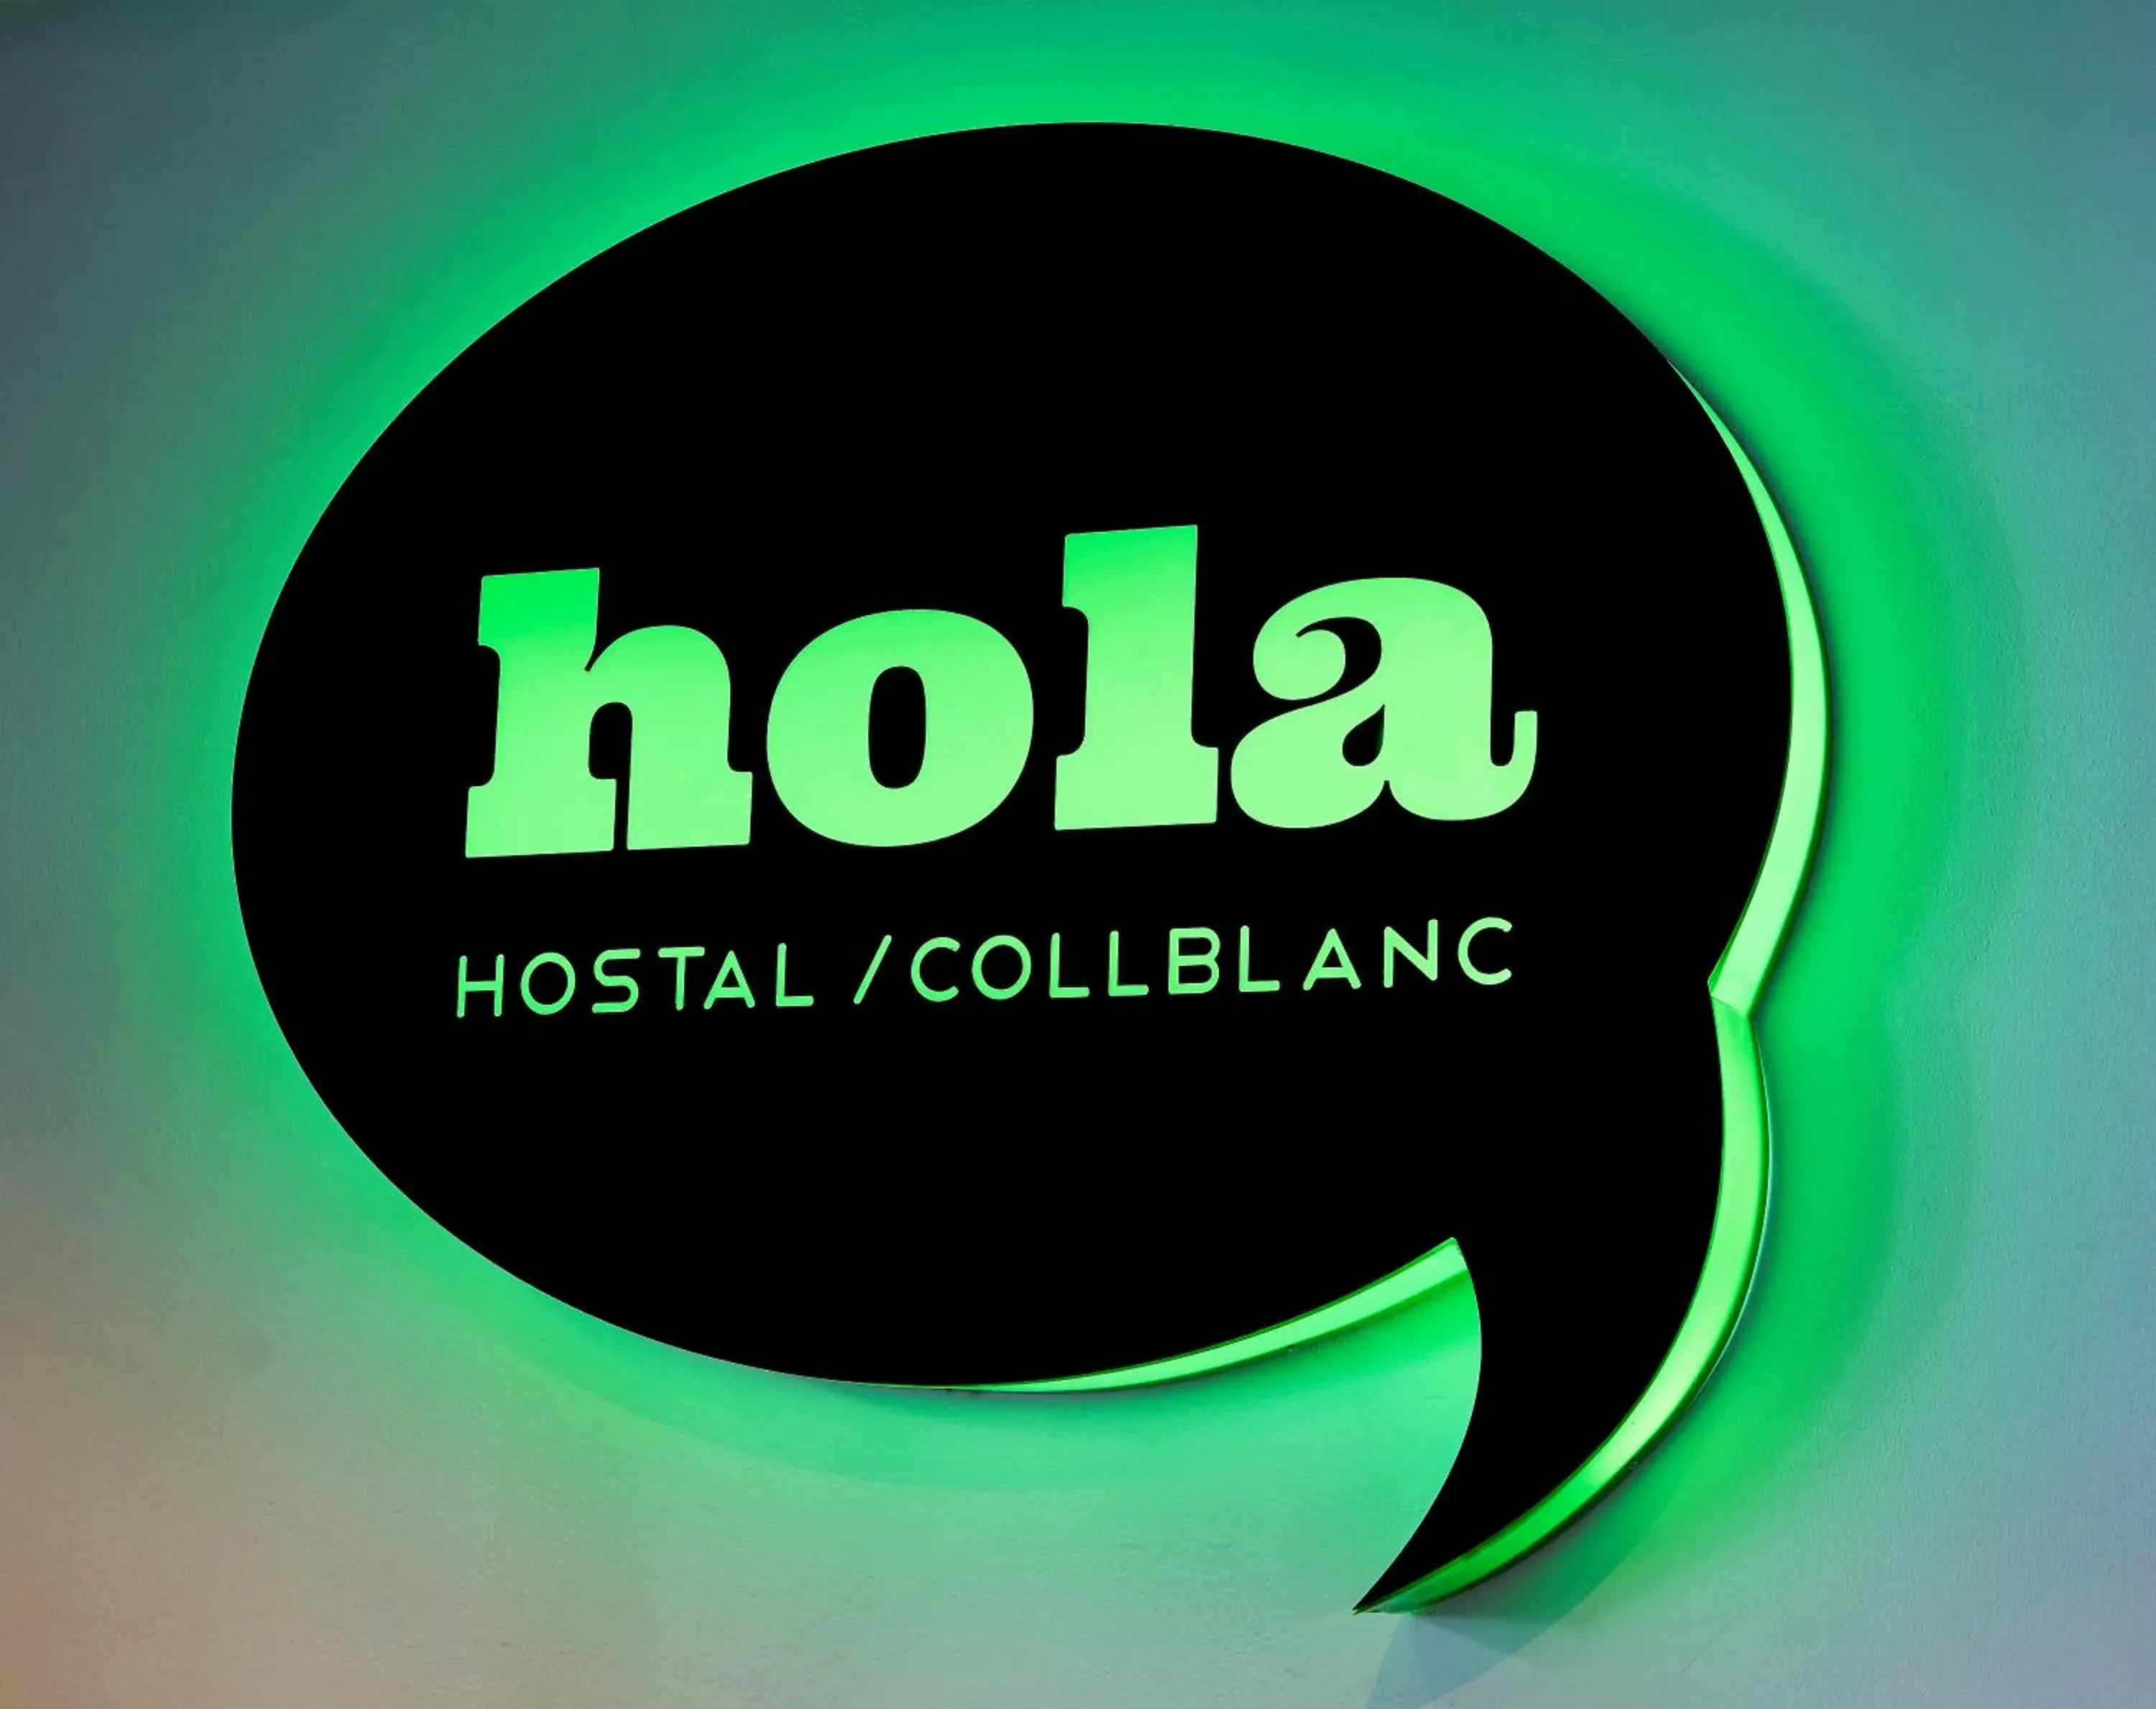 Property logo or sign in Hola Hostal Collblanc